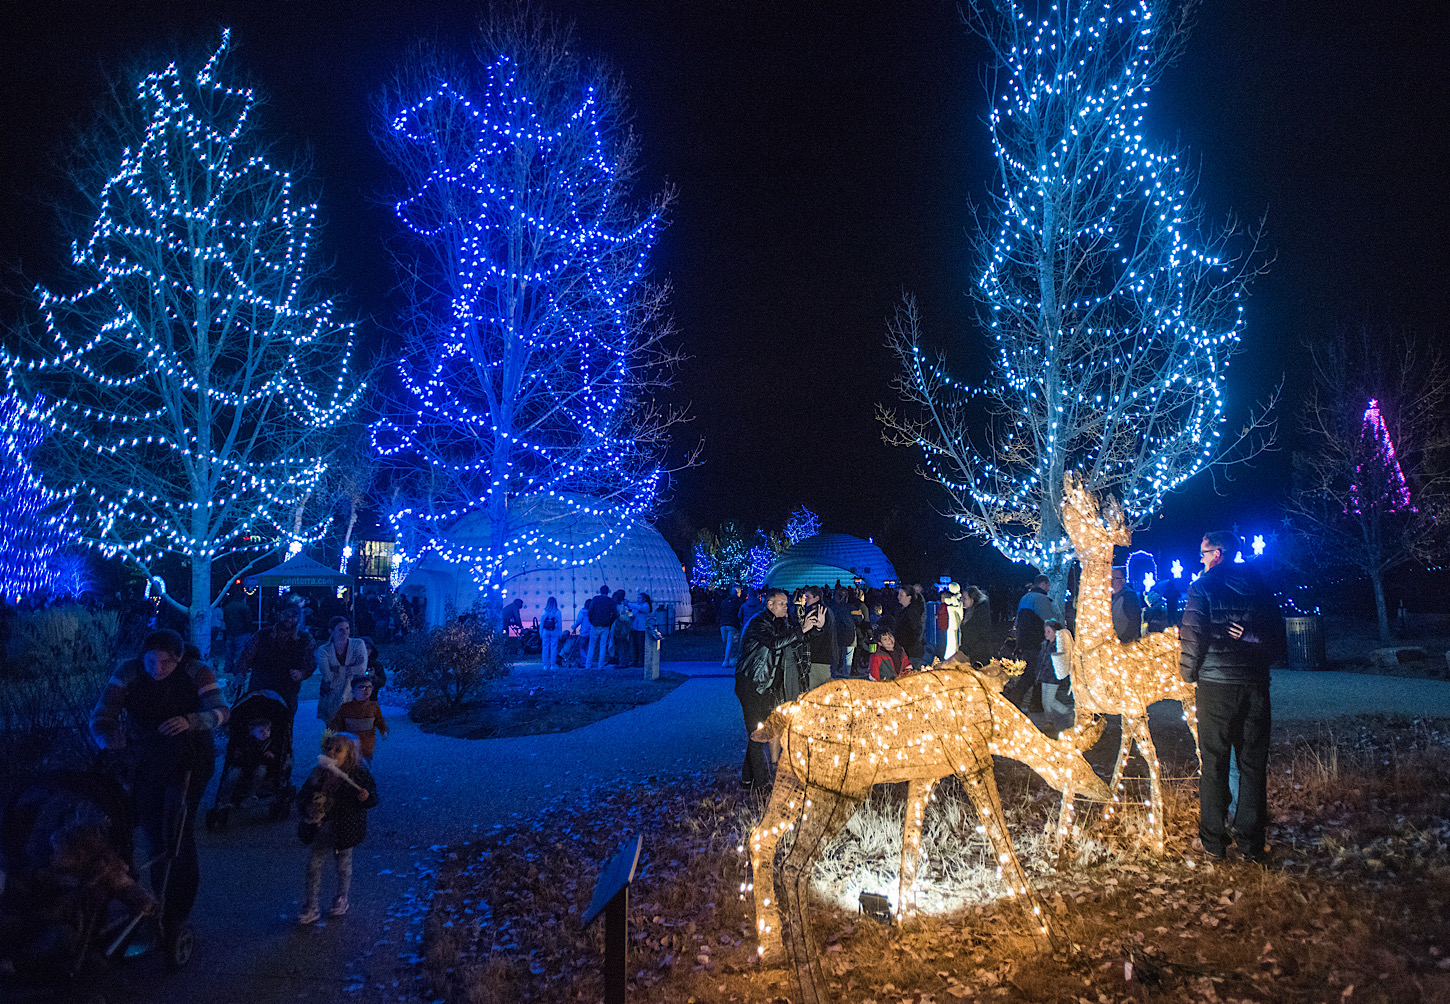 Loveland: Winter Wonder Lights